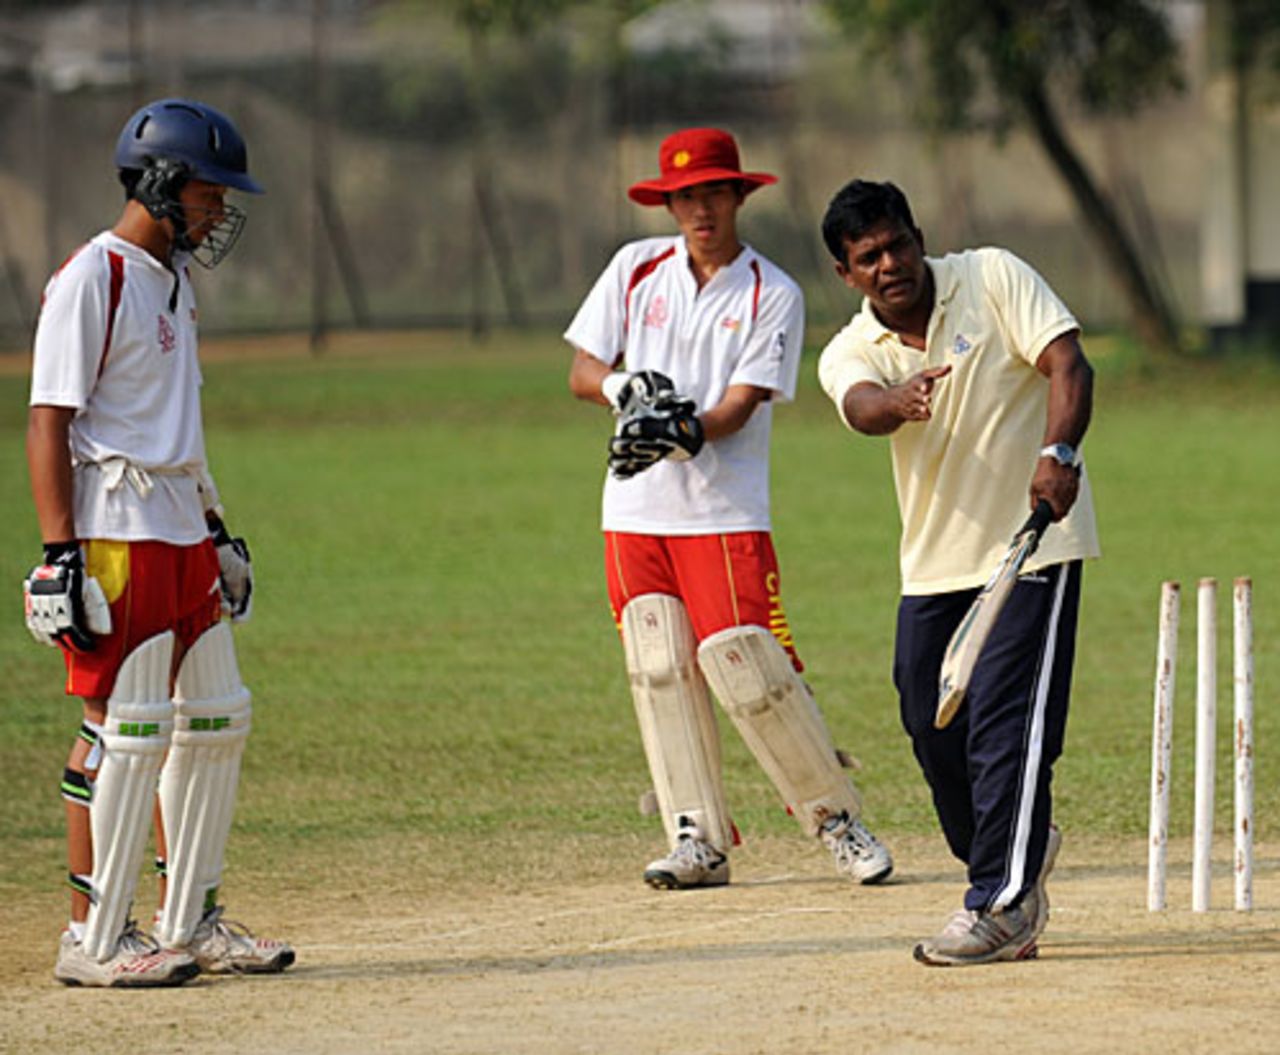 Aminul Islam teaches China's Under-19 cricket squad at Bangladesh's academy,